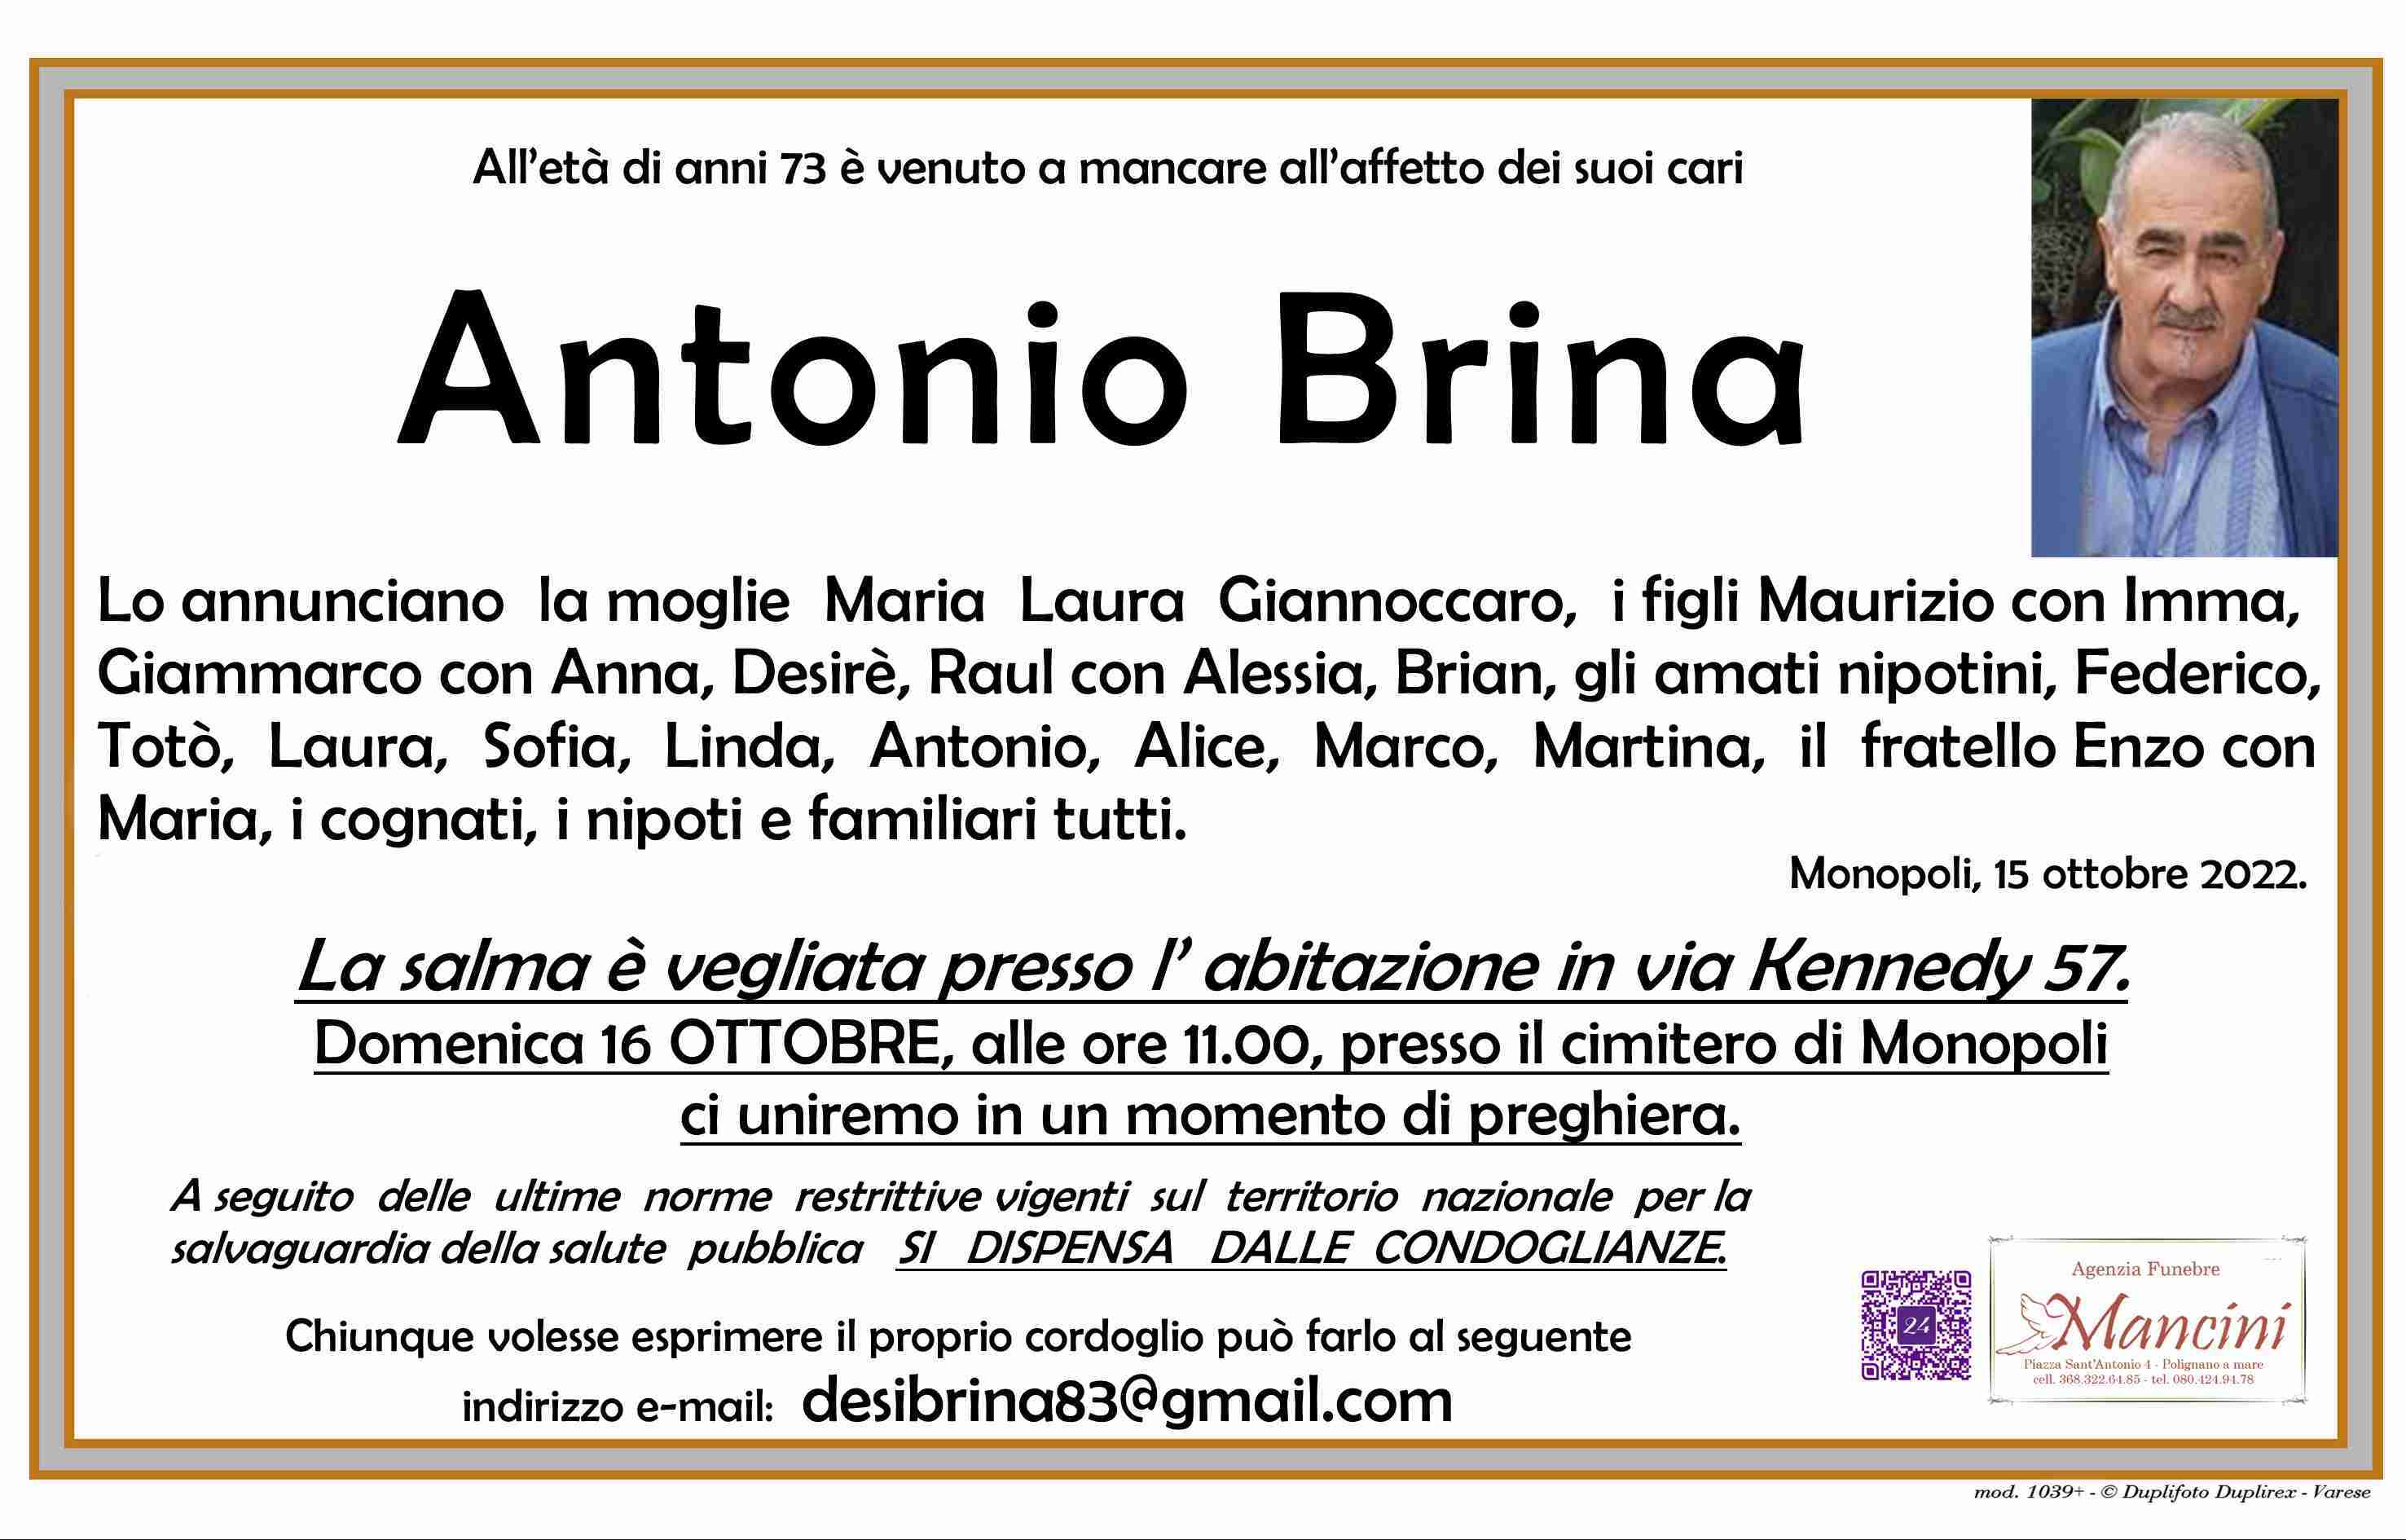 Antonio Brina